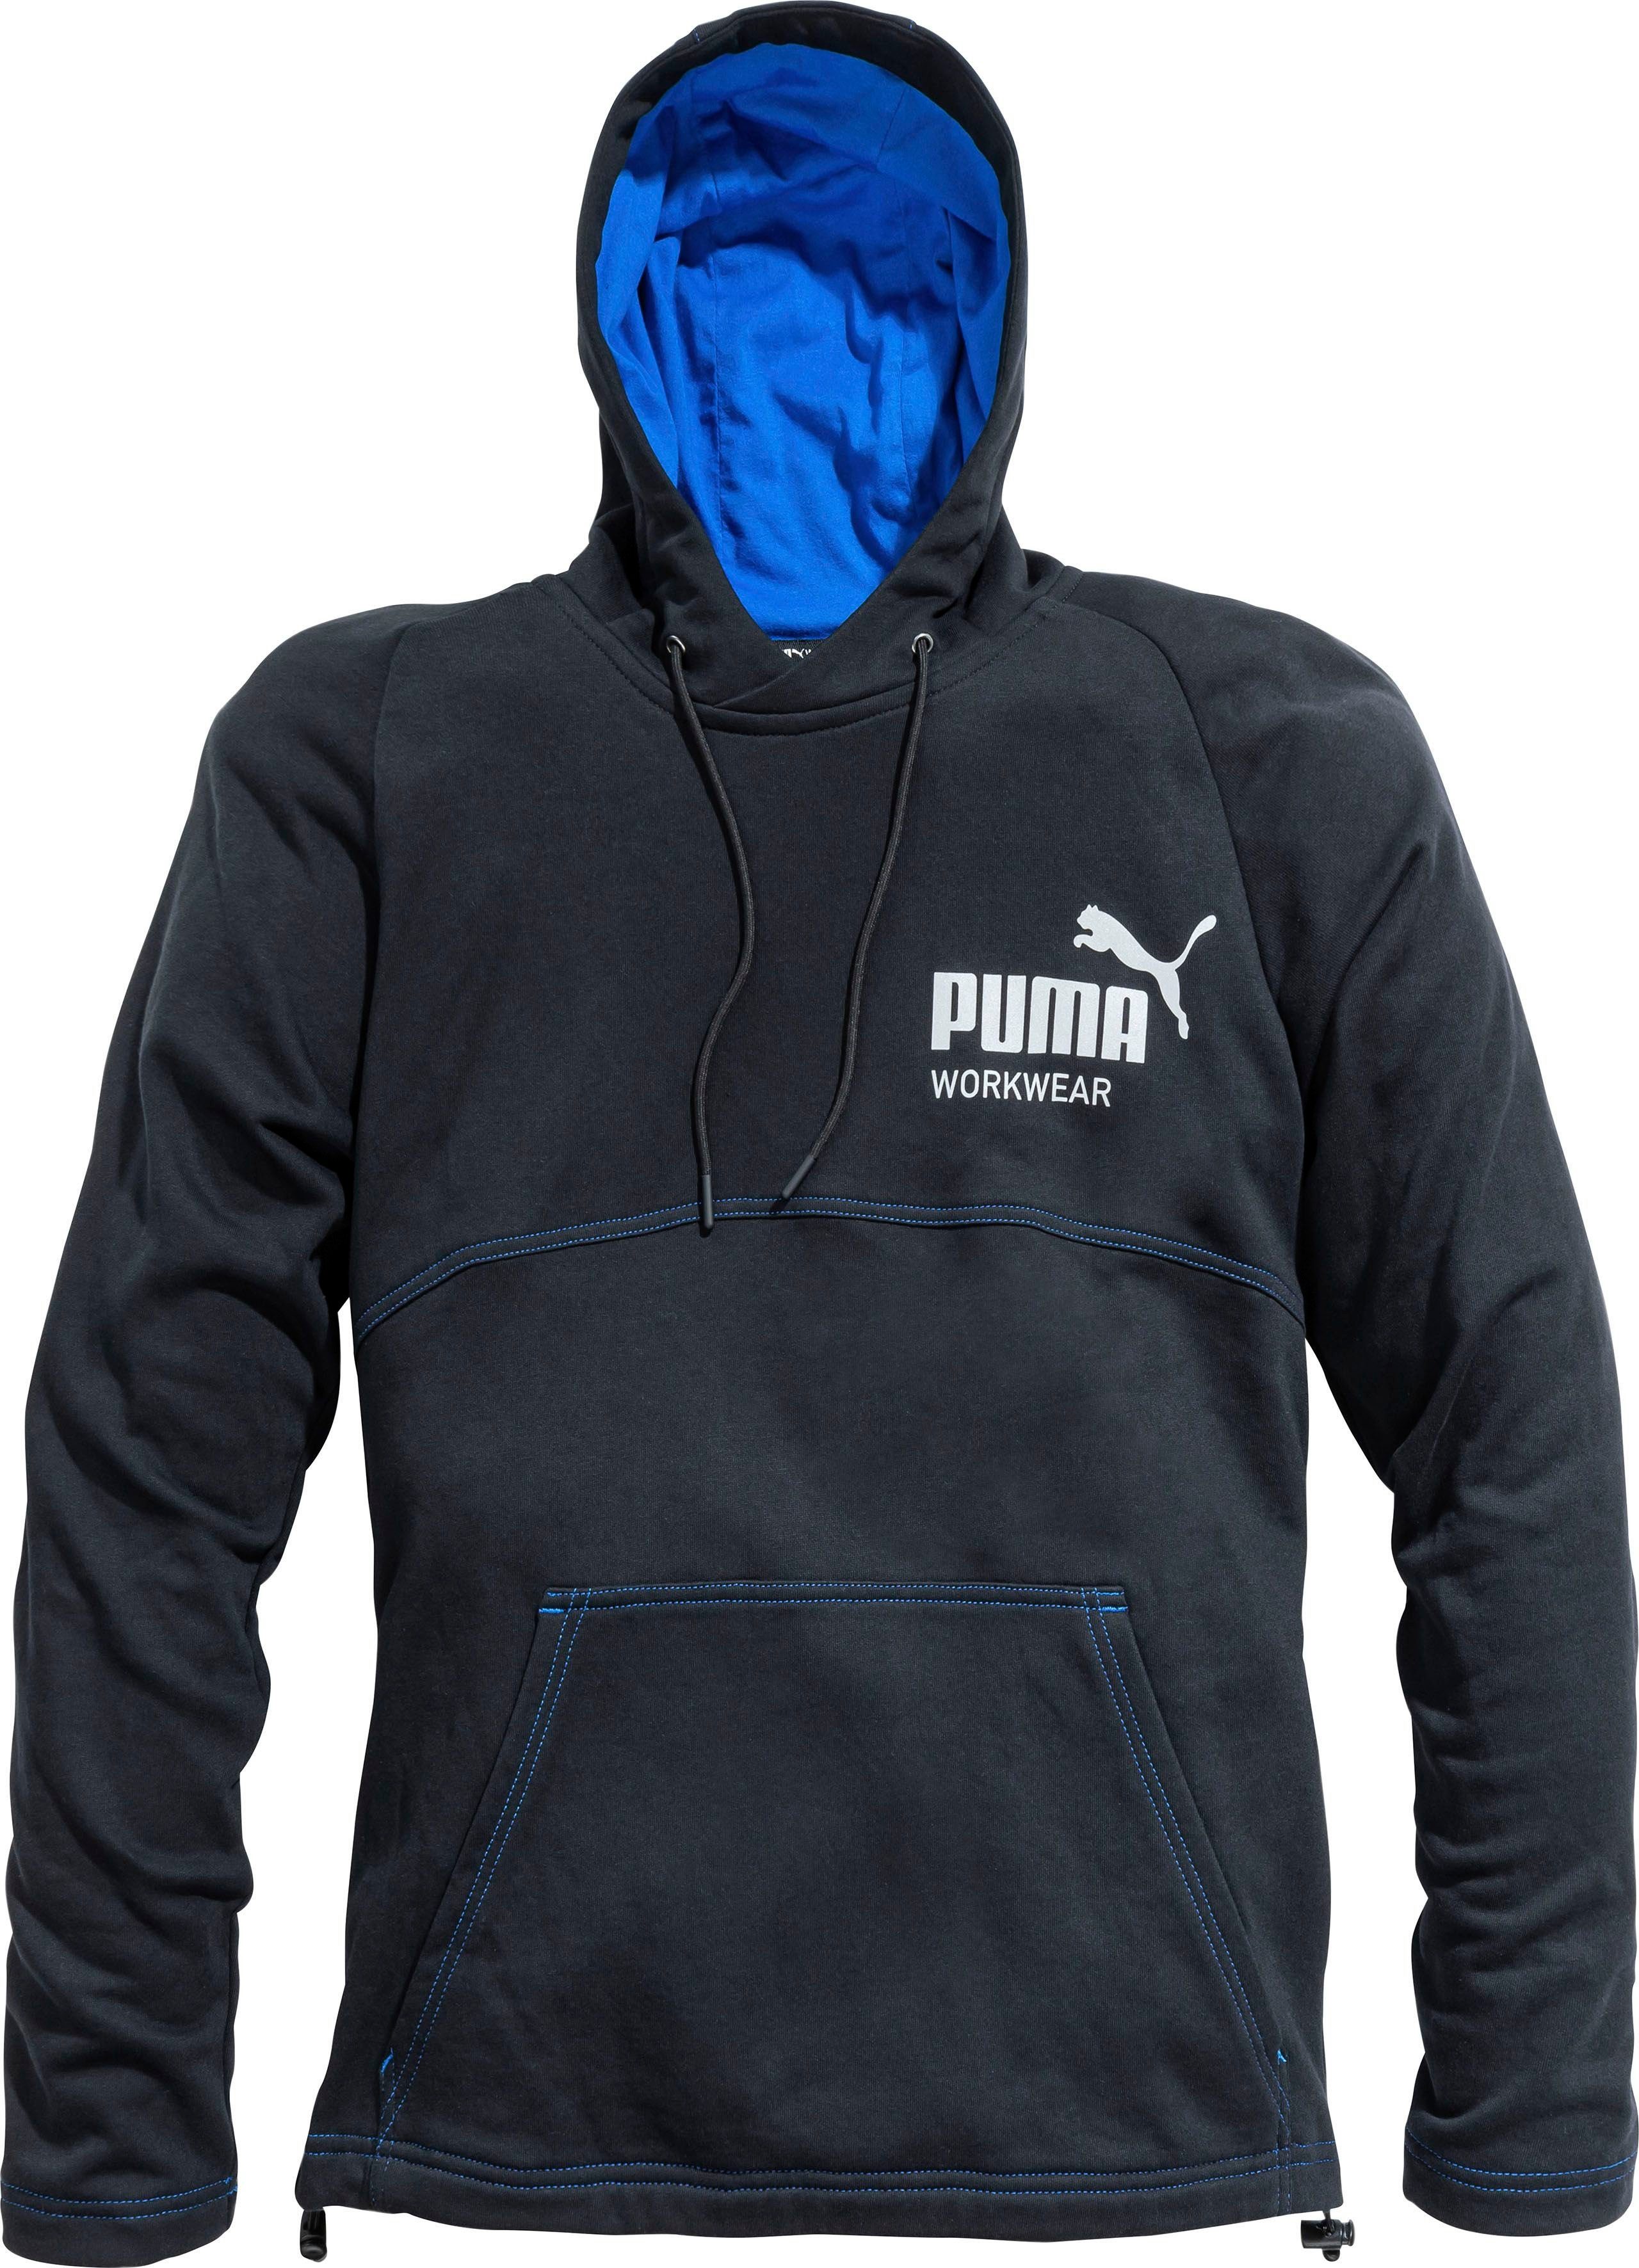 PUMA Workwear Hoodie CHAMP gefütterte Kapuze, Kangaroo-Tasche,  verstellbarer Saum, Kangaroo-Tasche mit Kontrastnähten